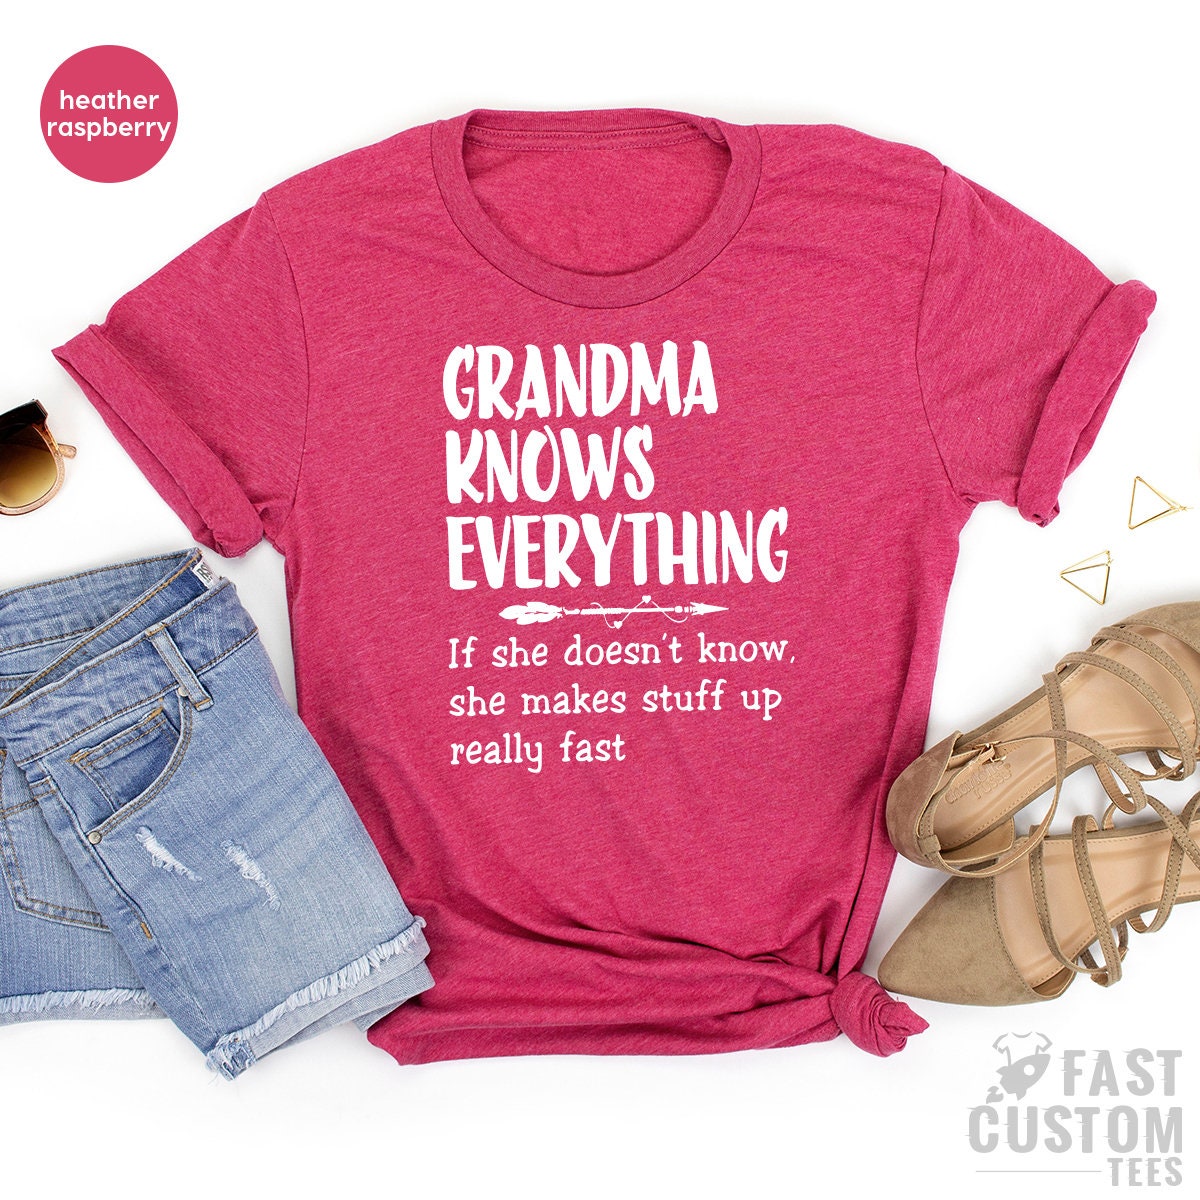 Funny Grandma Shirt, Gigi T Shirt, Nana TShirt, Gift For Grandmother, Grandparent Gifts, Grandma Knows Everything Tee, Grumpa Gift - Fastdeliverytees.com